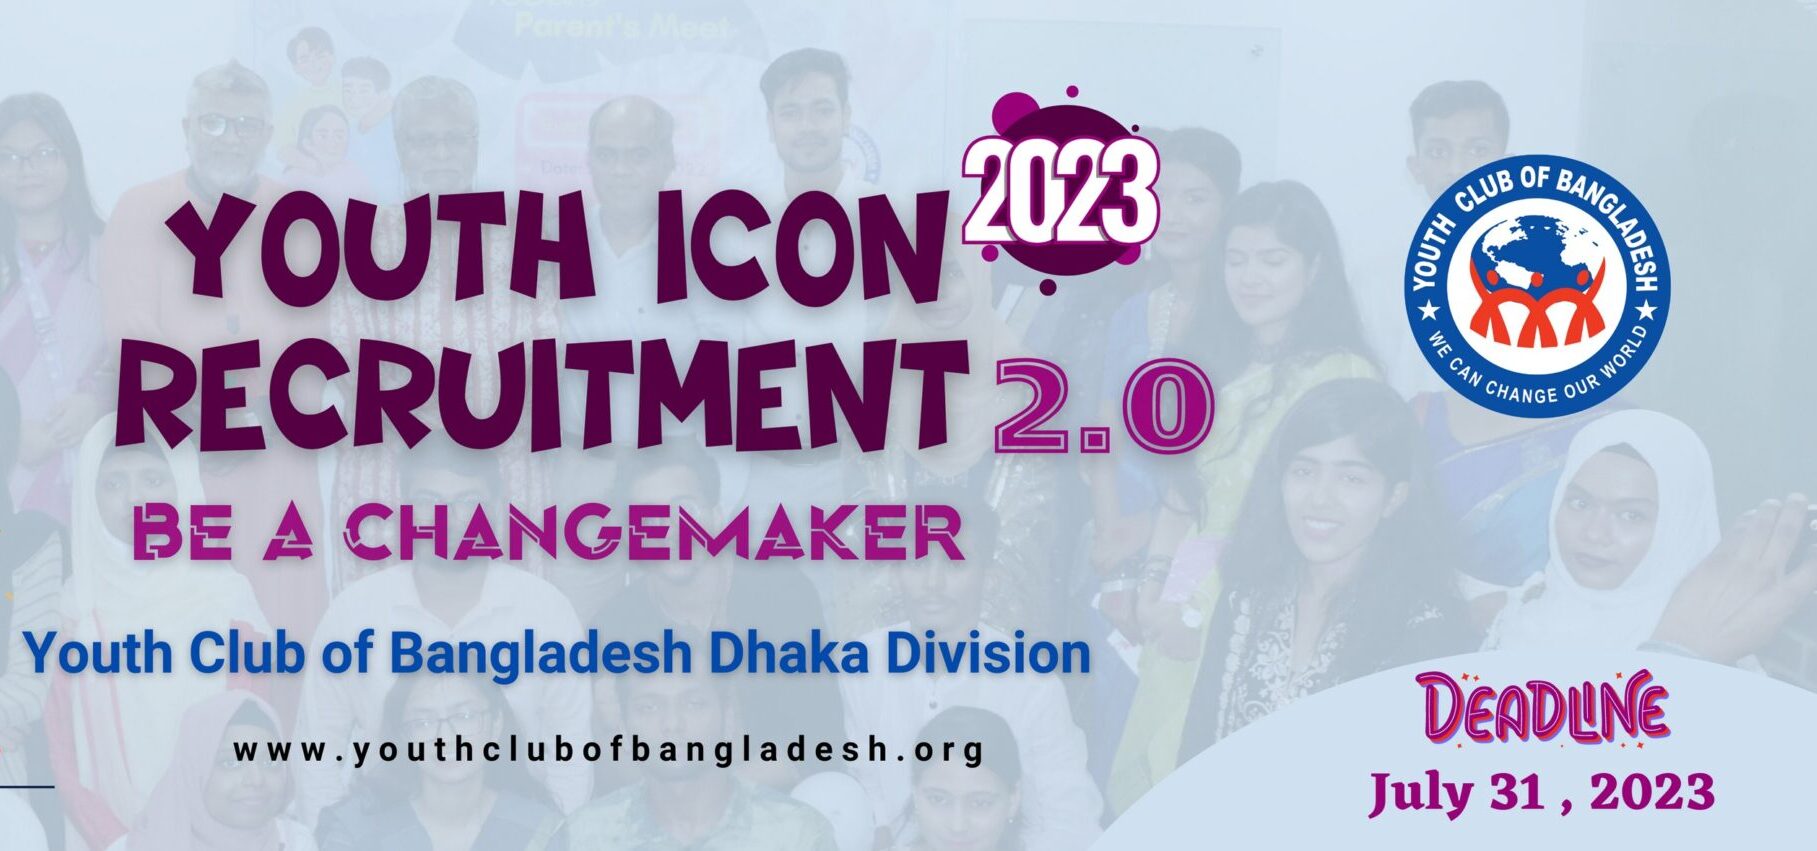 Youth Club of Bangladesh